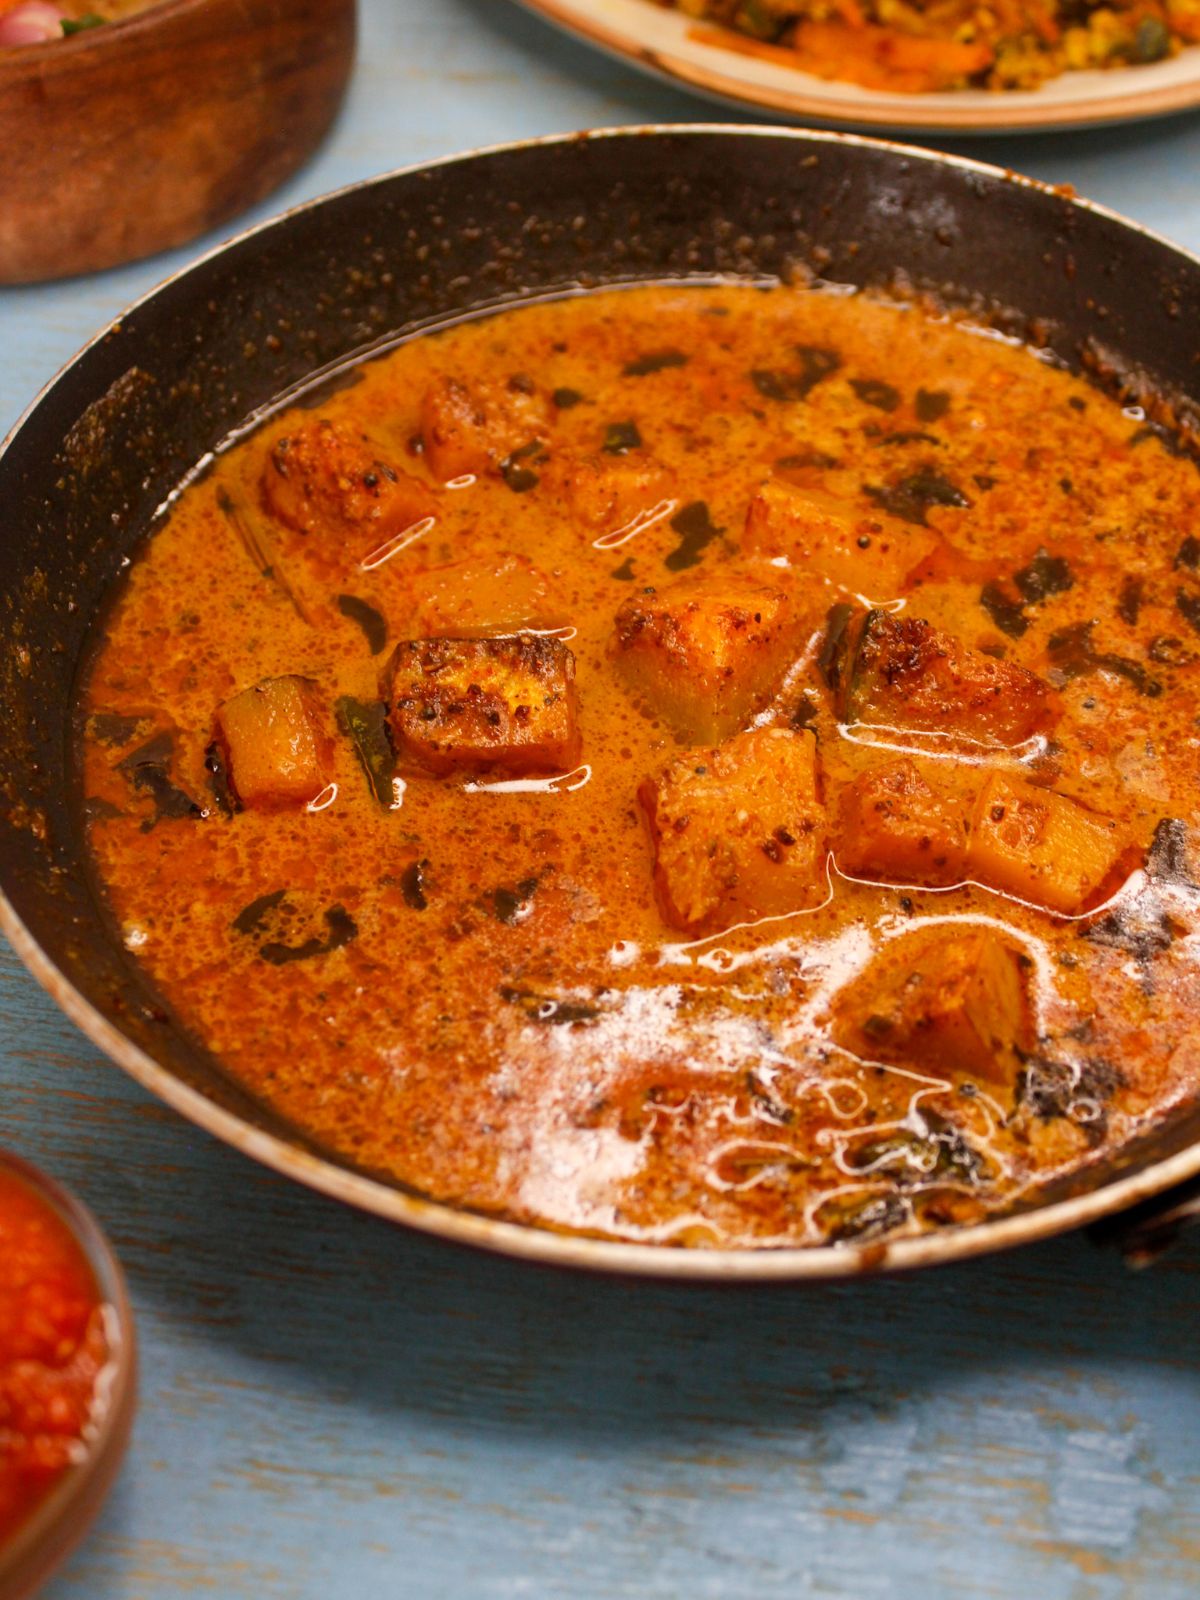 Sri Lankan Pumpkin Curry served with roti or rice